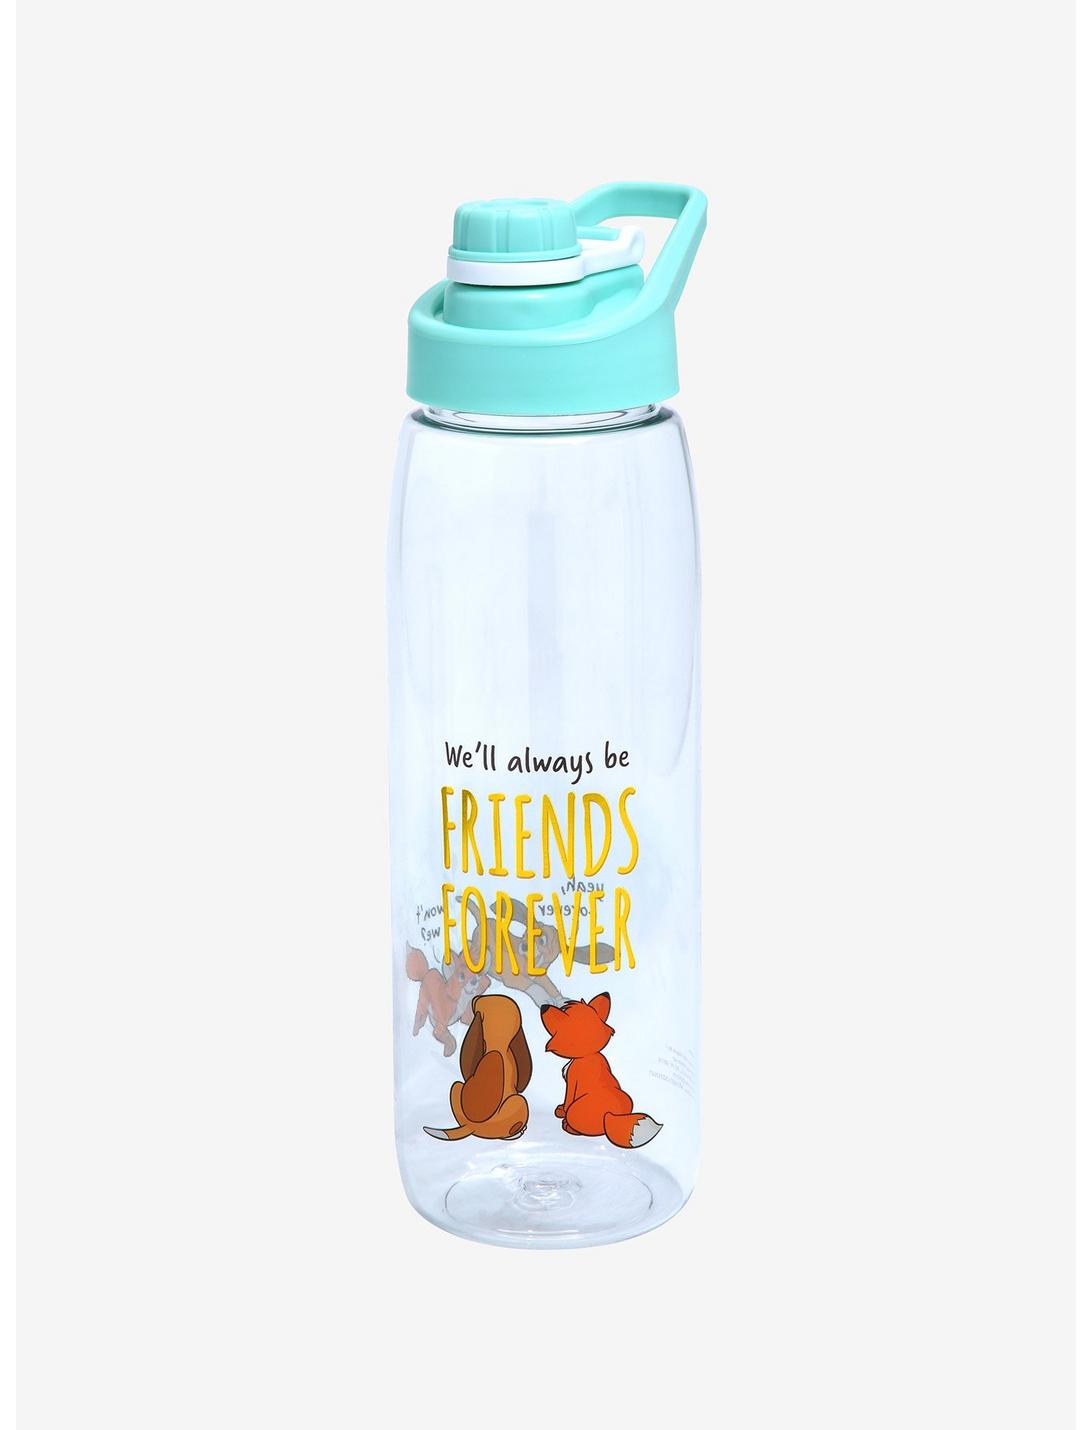 Disney Minnie Mouse Water Bottle Keyring Mickey & Friends Kids 3 Girls for sale online 